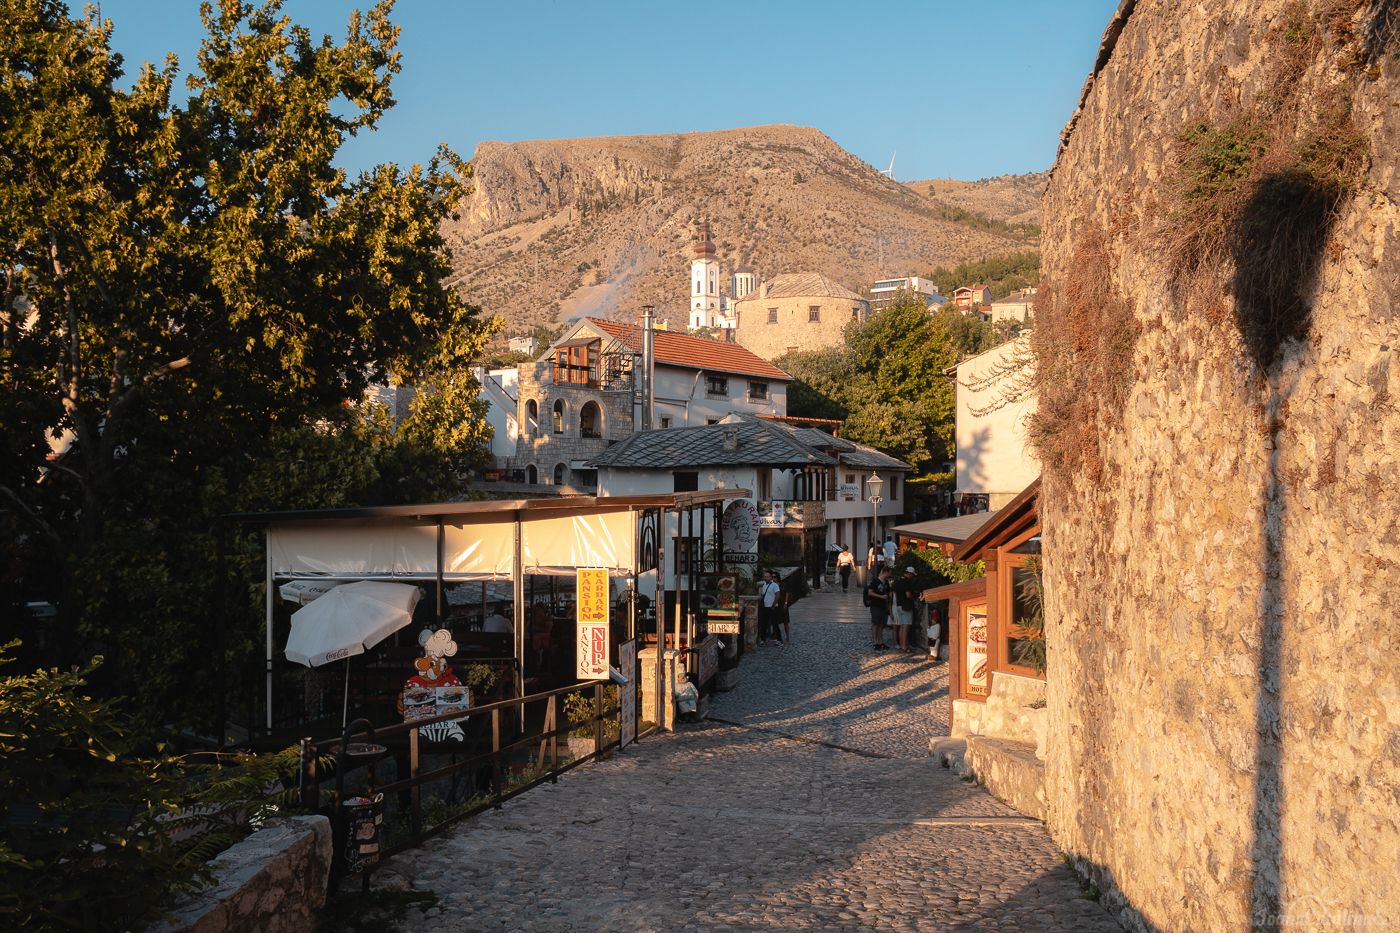 Mostar Bosnia and Herzegovina 2